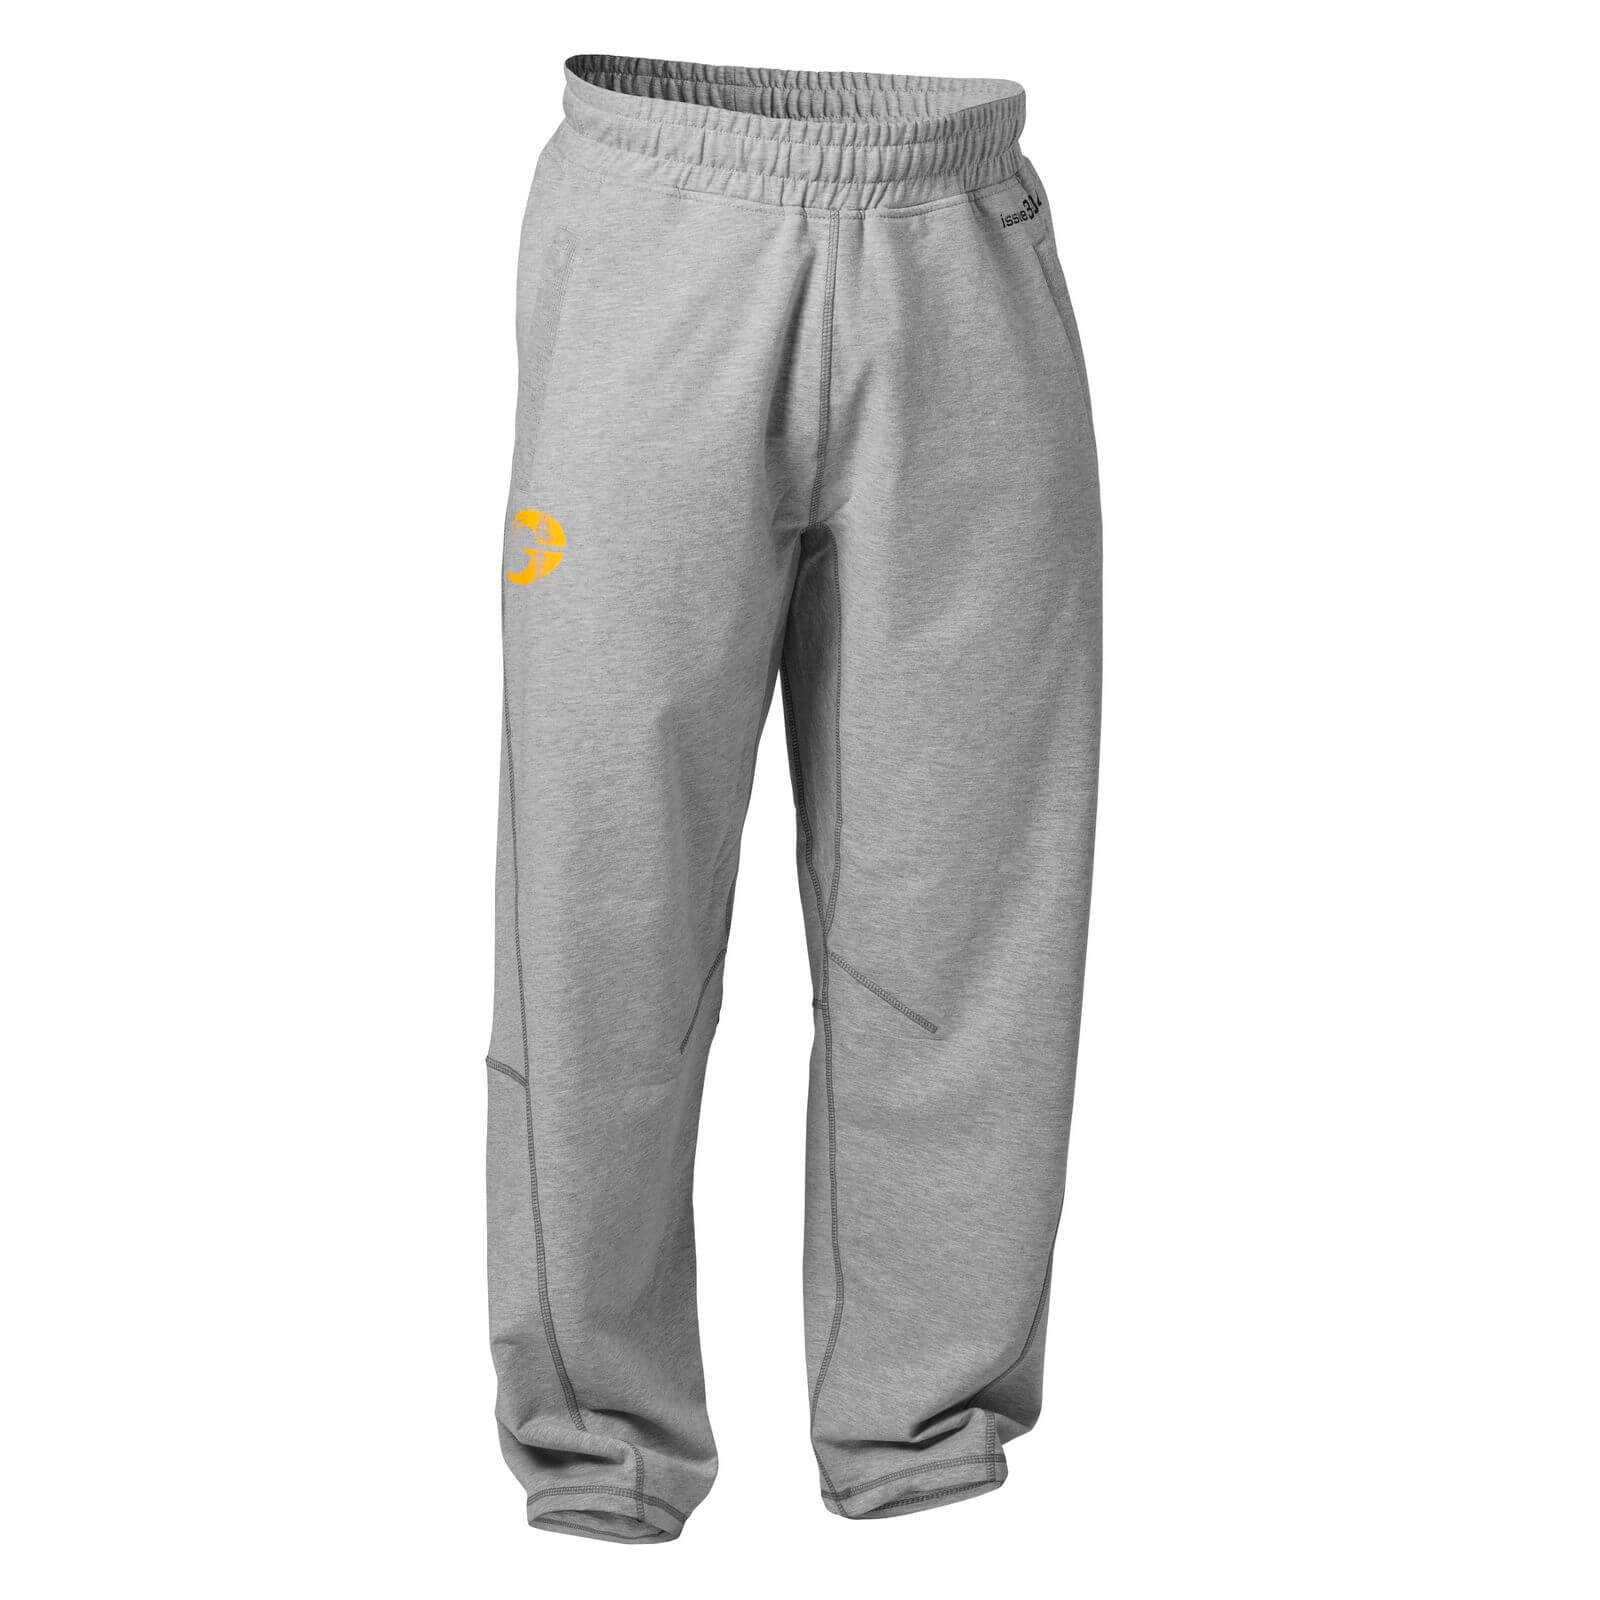 Annex Gym Pants, grey melange, GASP